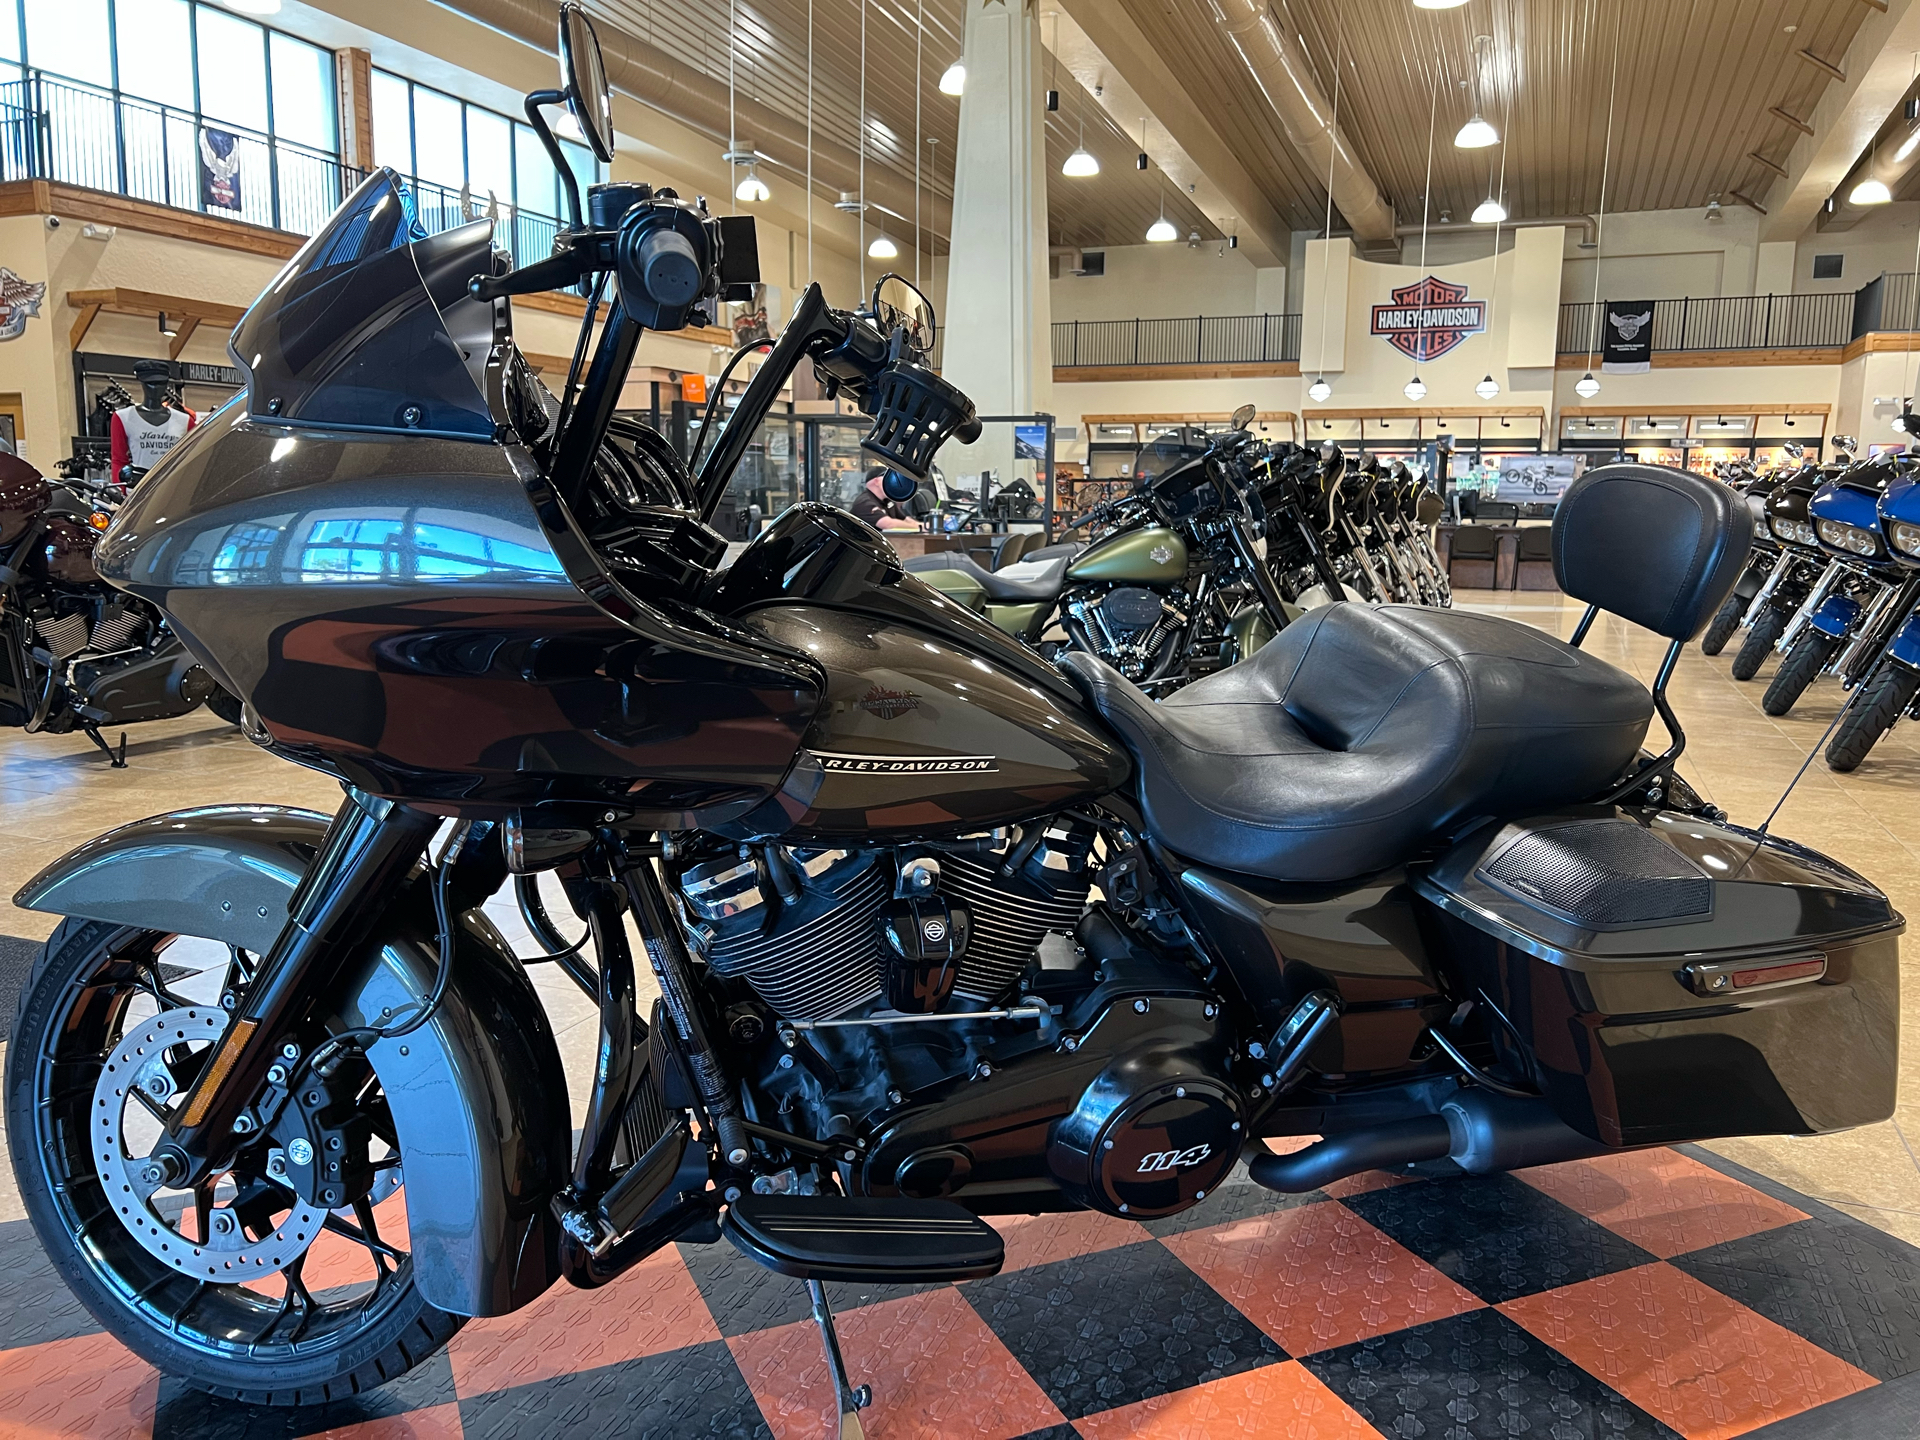 2020 Harley-Davidson Road Glide® Special in Pasadena, Texas - Photo 4